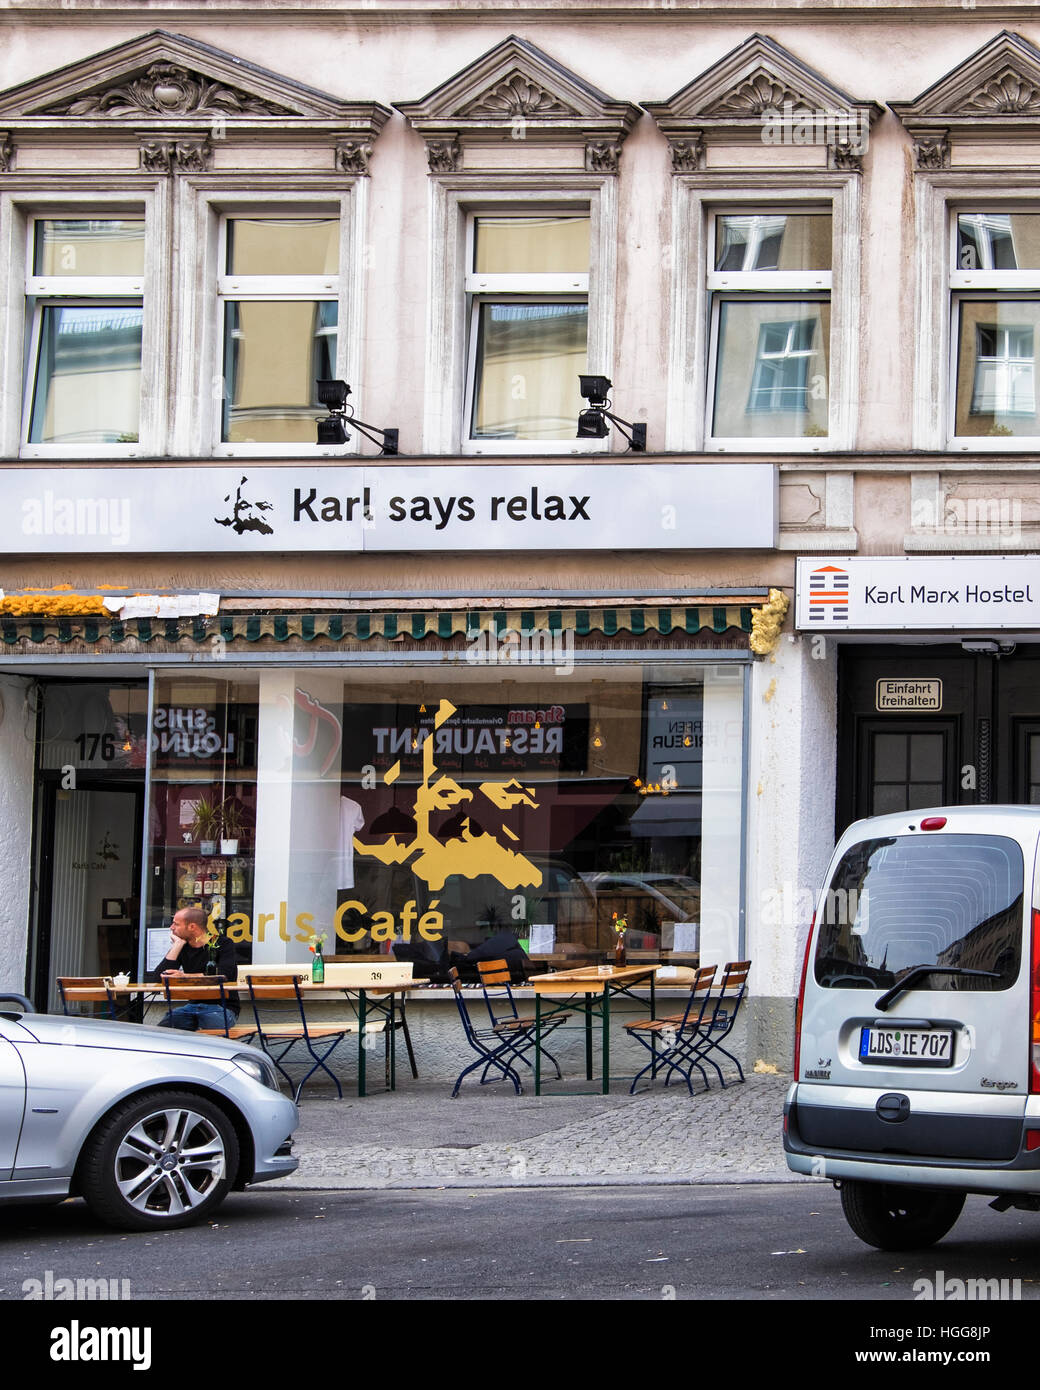 Berlin Neukölln, Karl Marx Strasse. Berlin urban street Karl Marx Hostel, Karl's Cafe and 'Karl says relax' slogan Stock Photo